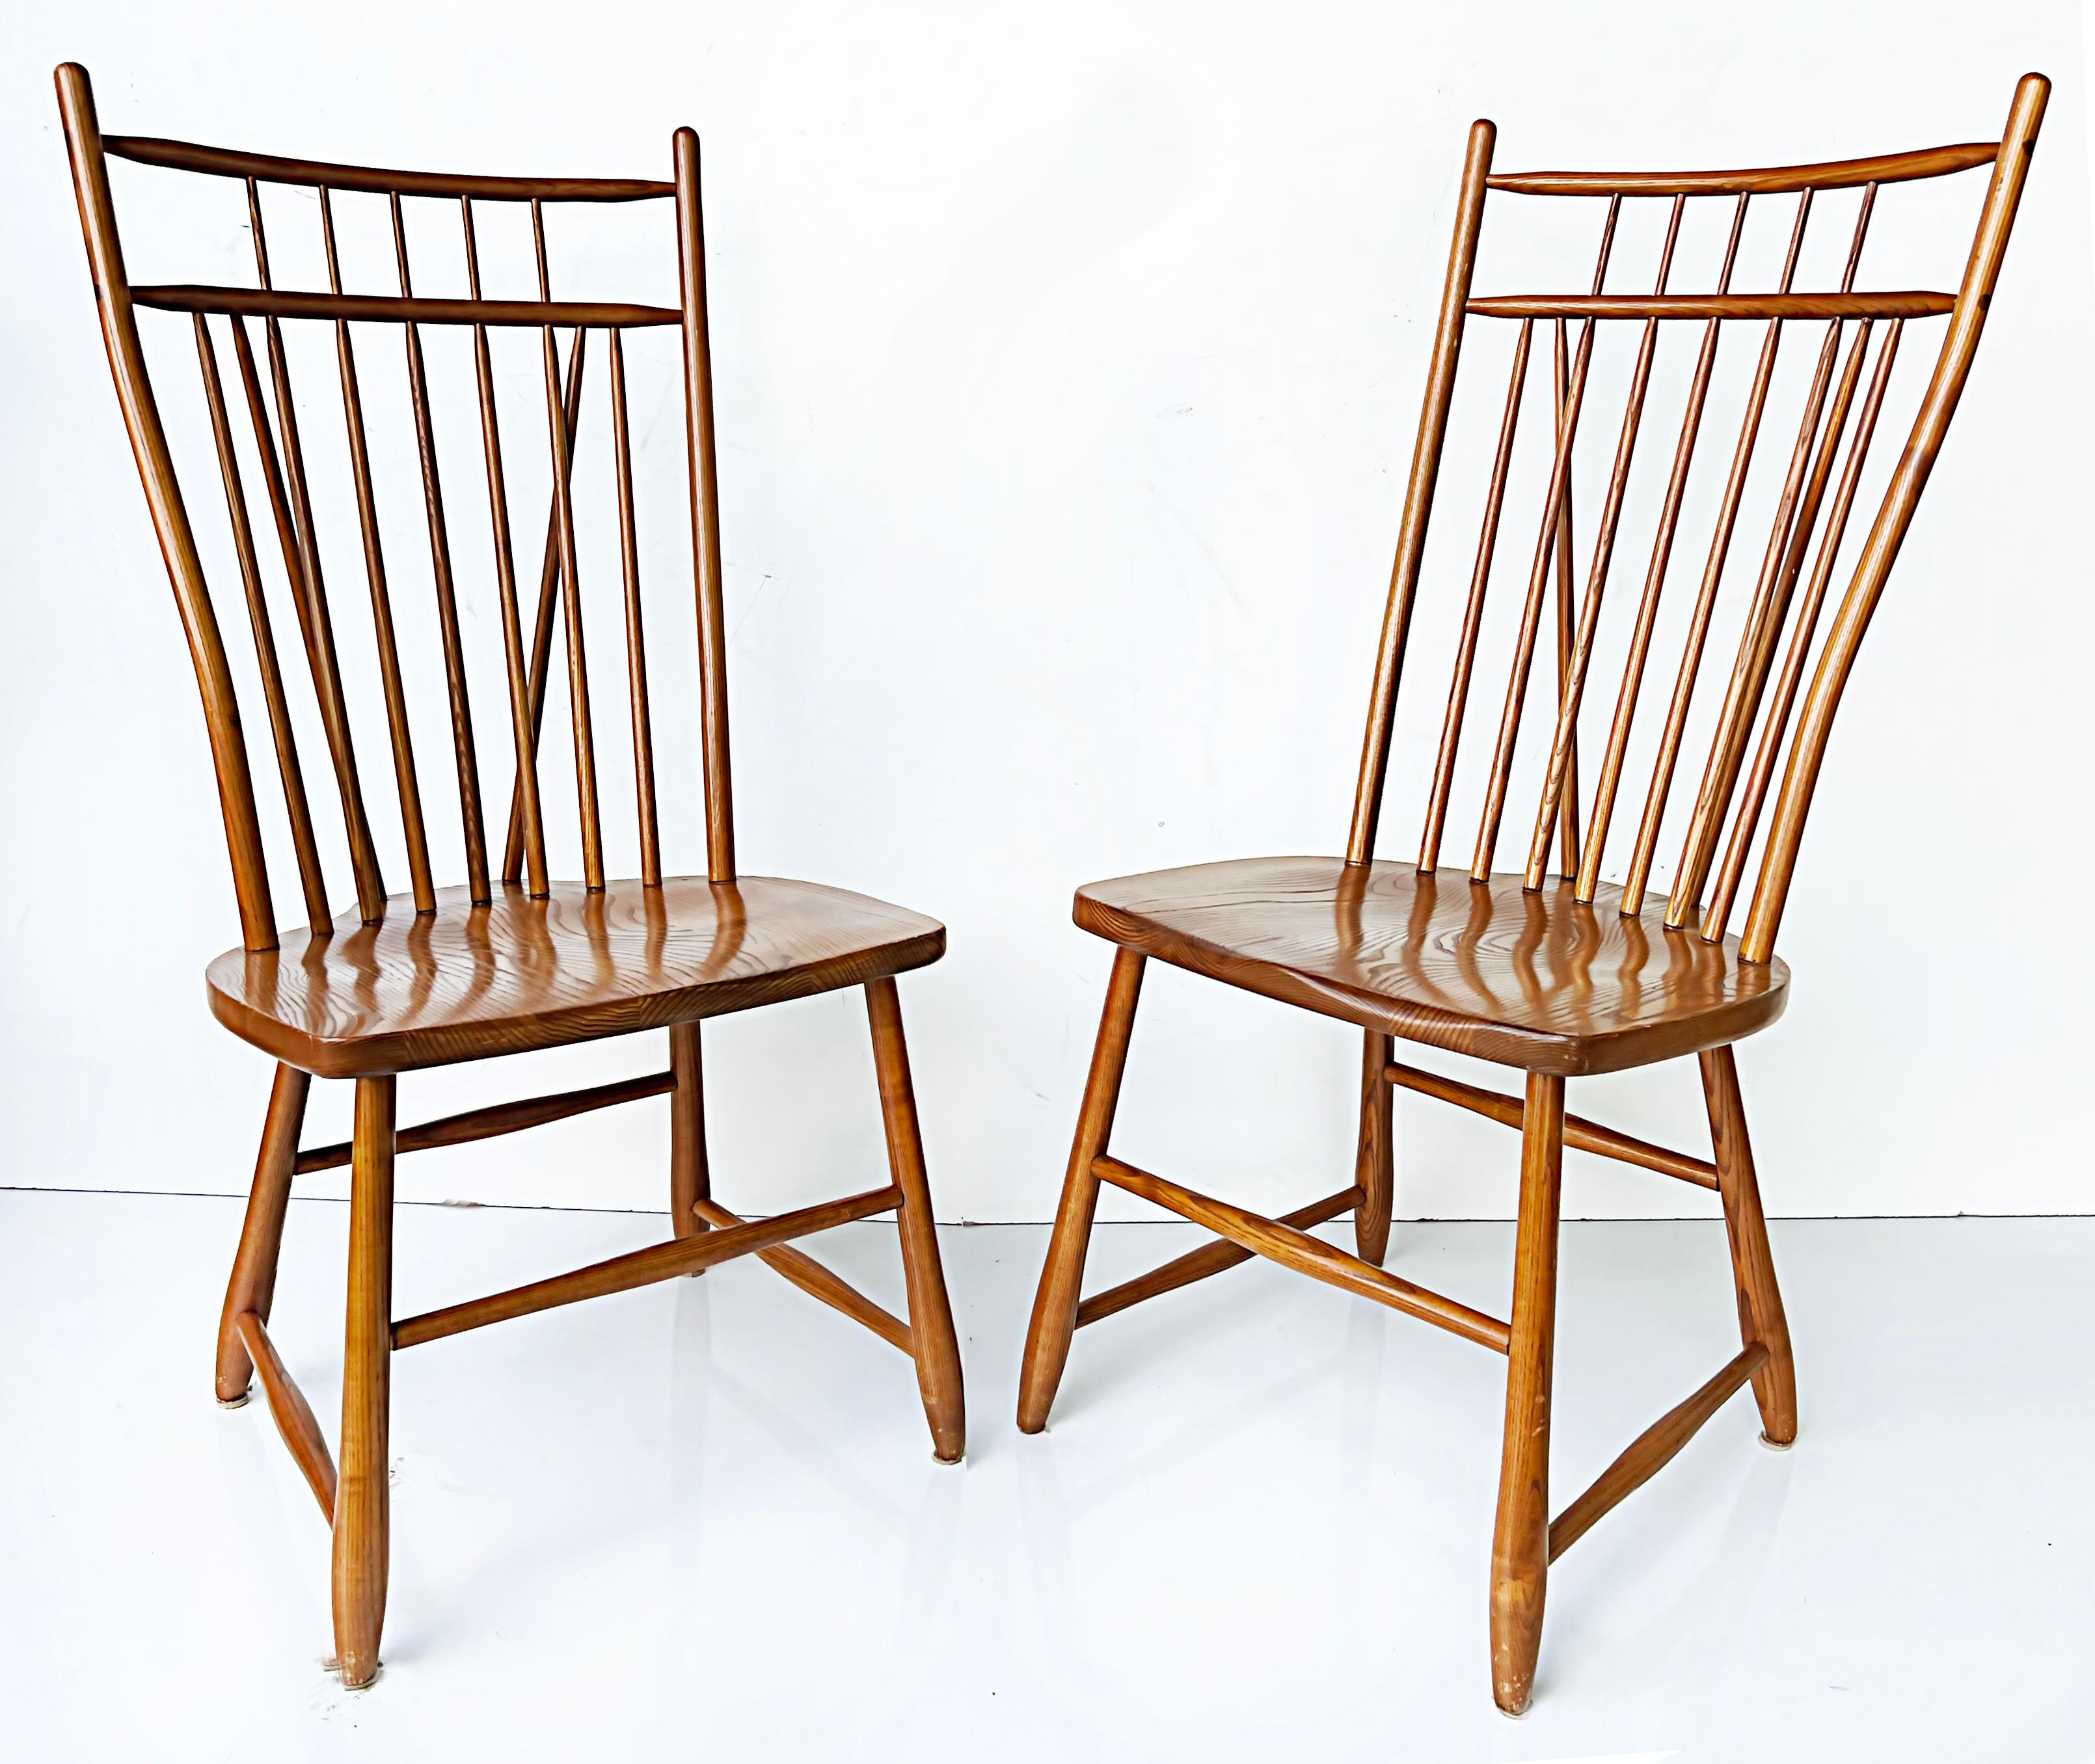 American S Bent Bros. Vintage Modern Windsor Chairs, Set of 6, 1960s